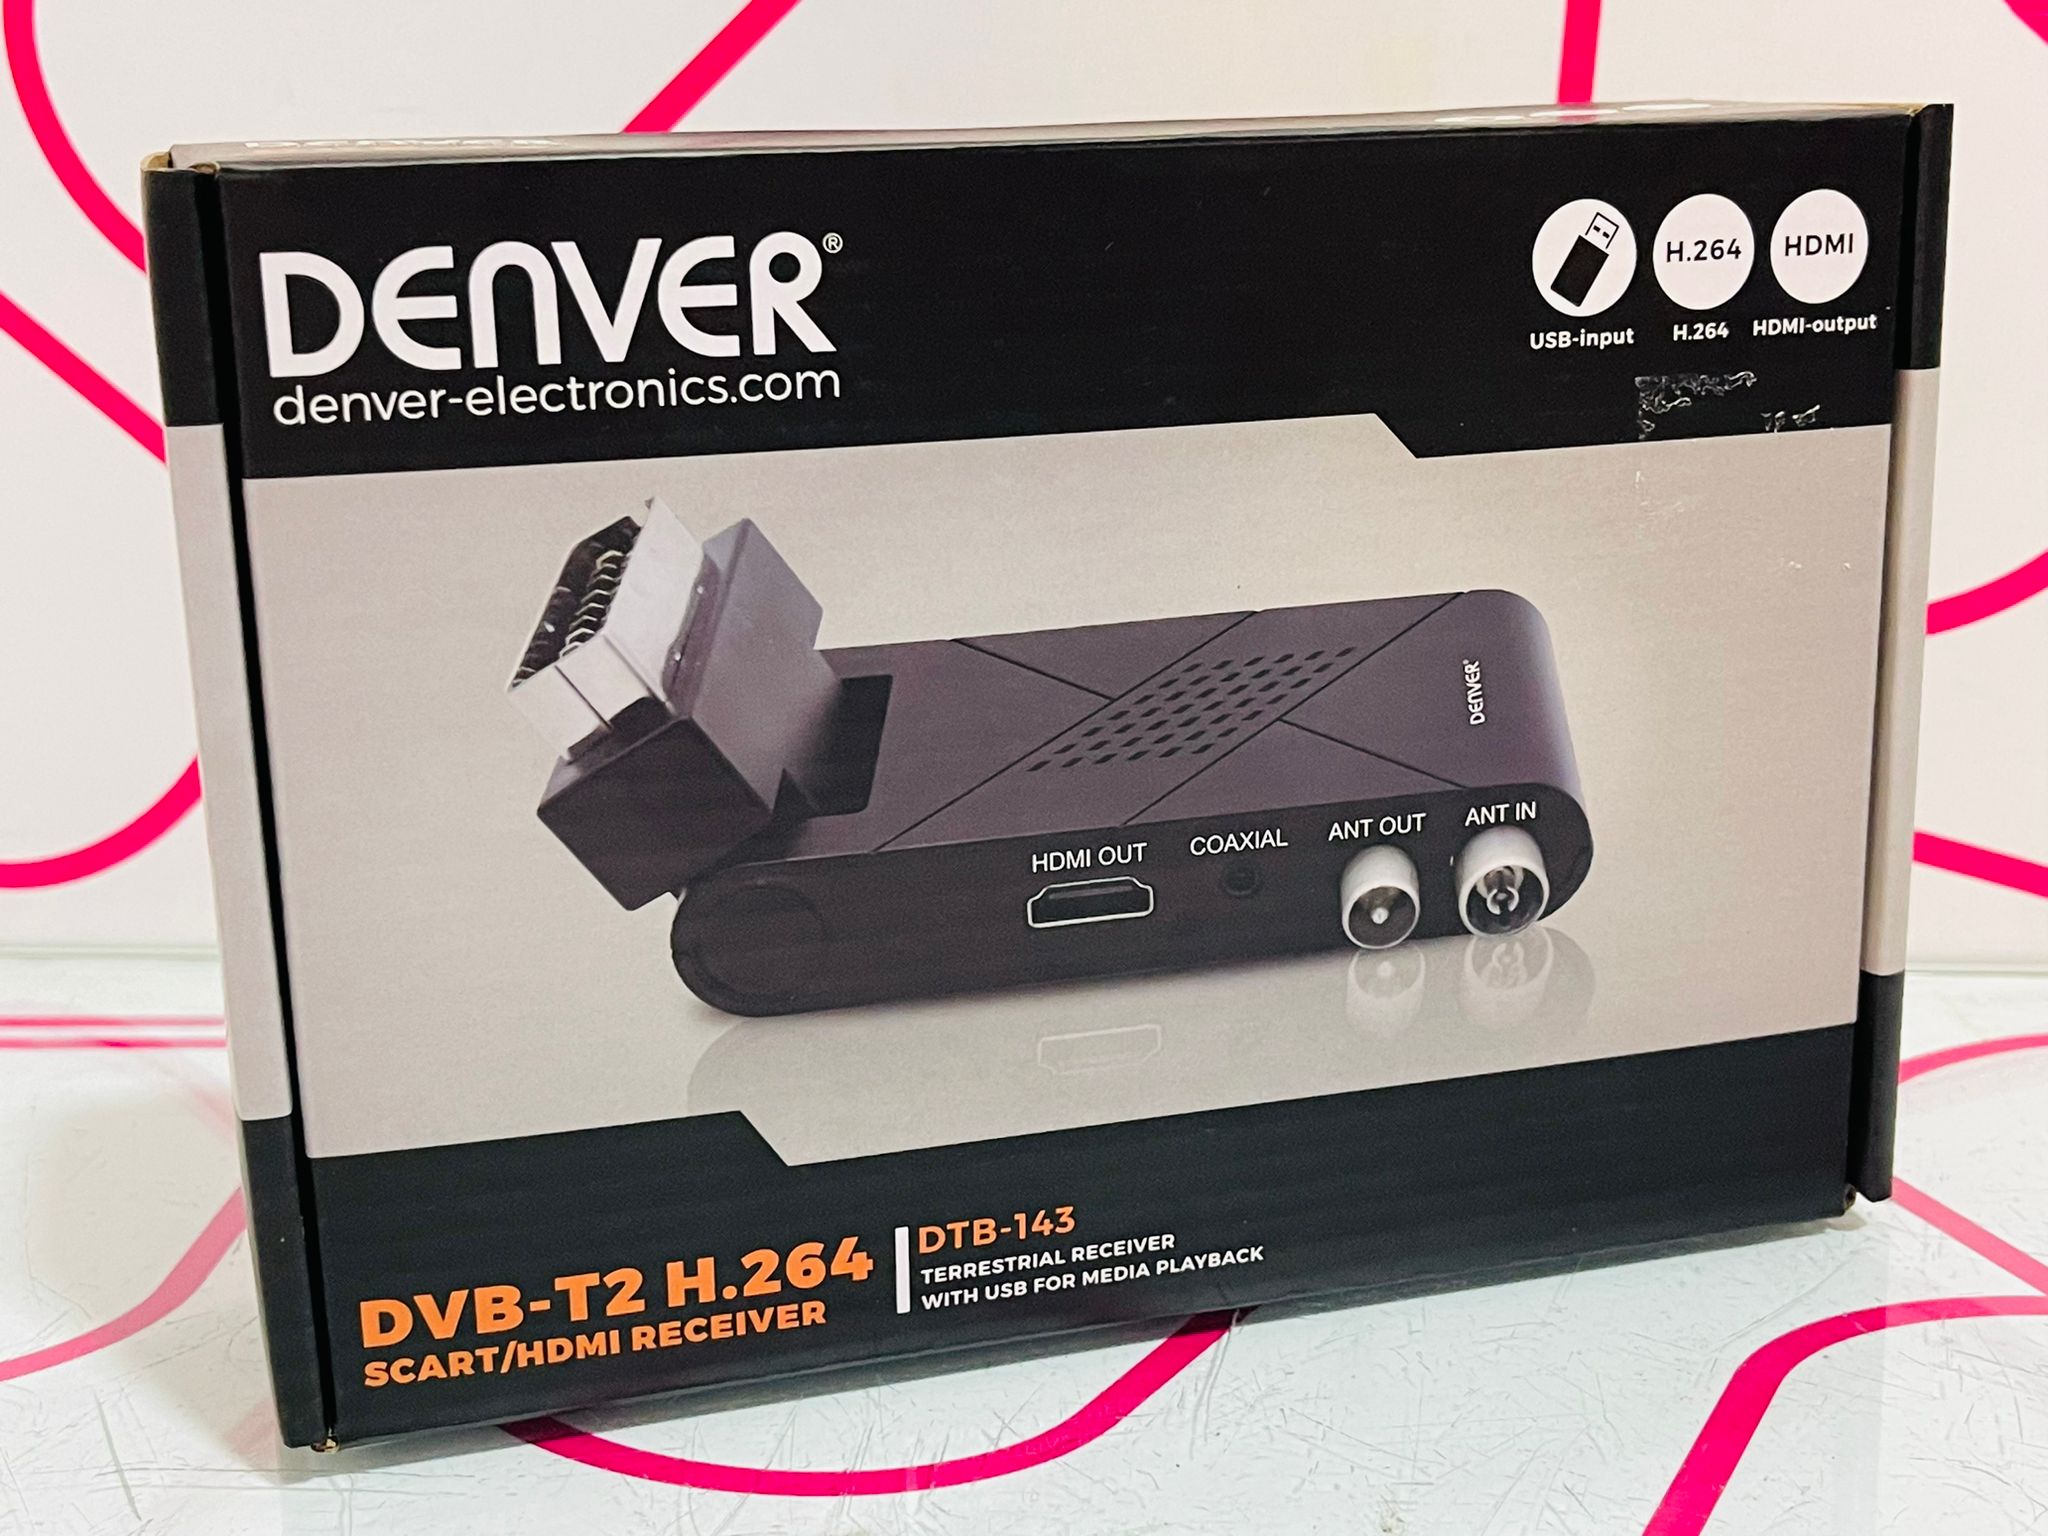 Receptor Terrestre TDT DVB-T2 2024 HDMI TV Stick, OWERSLYN Mini  Decodificador TDT HD 1080P H.265 HEVC 10 bit, Soporta Salida HDMI/AV y USB  Multimedia, Función PVR, Mando a Distancia Universal 2en1 